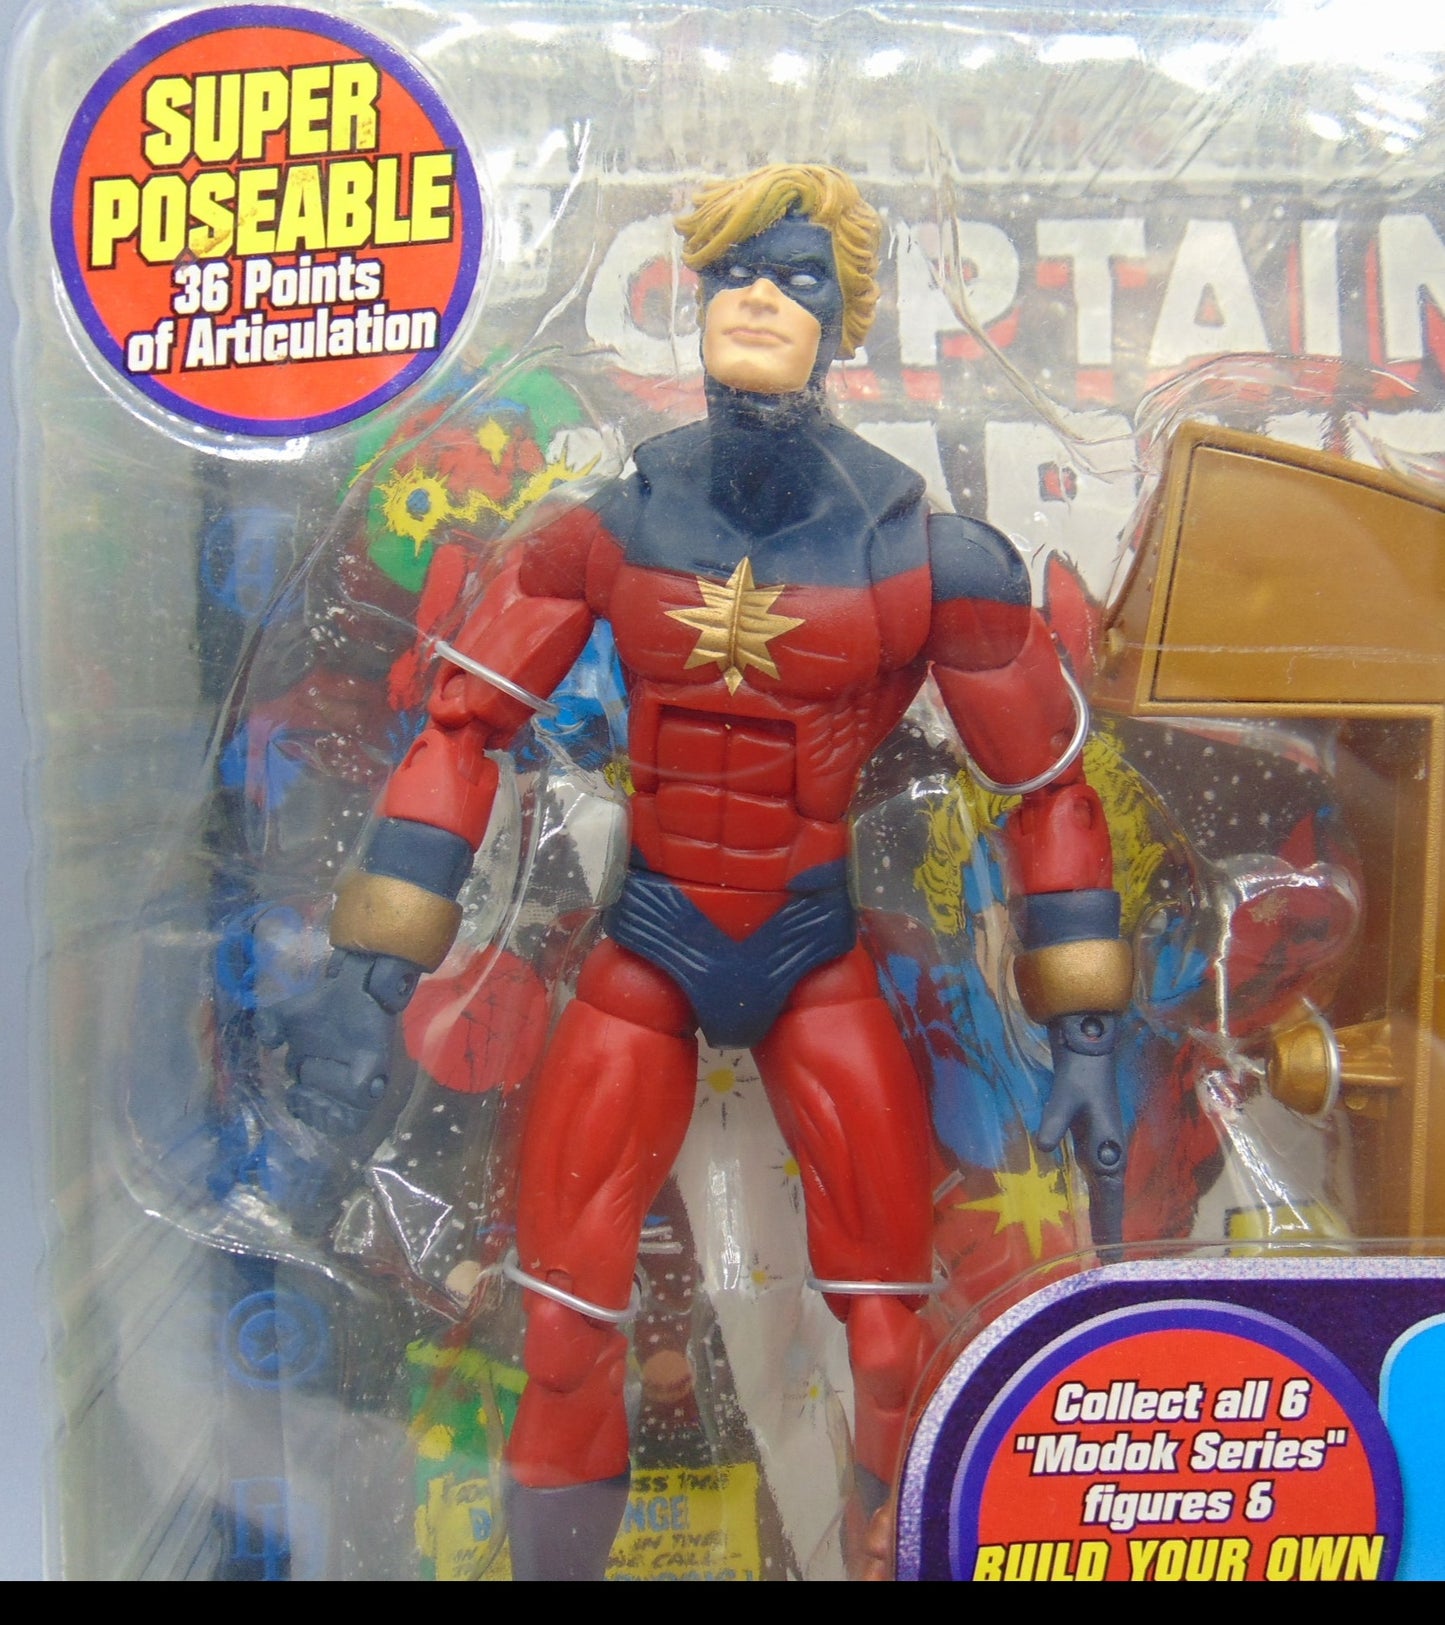 Captain Marvel - Marvel Legends